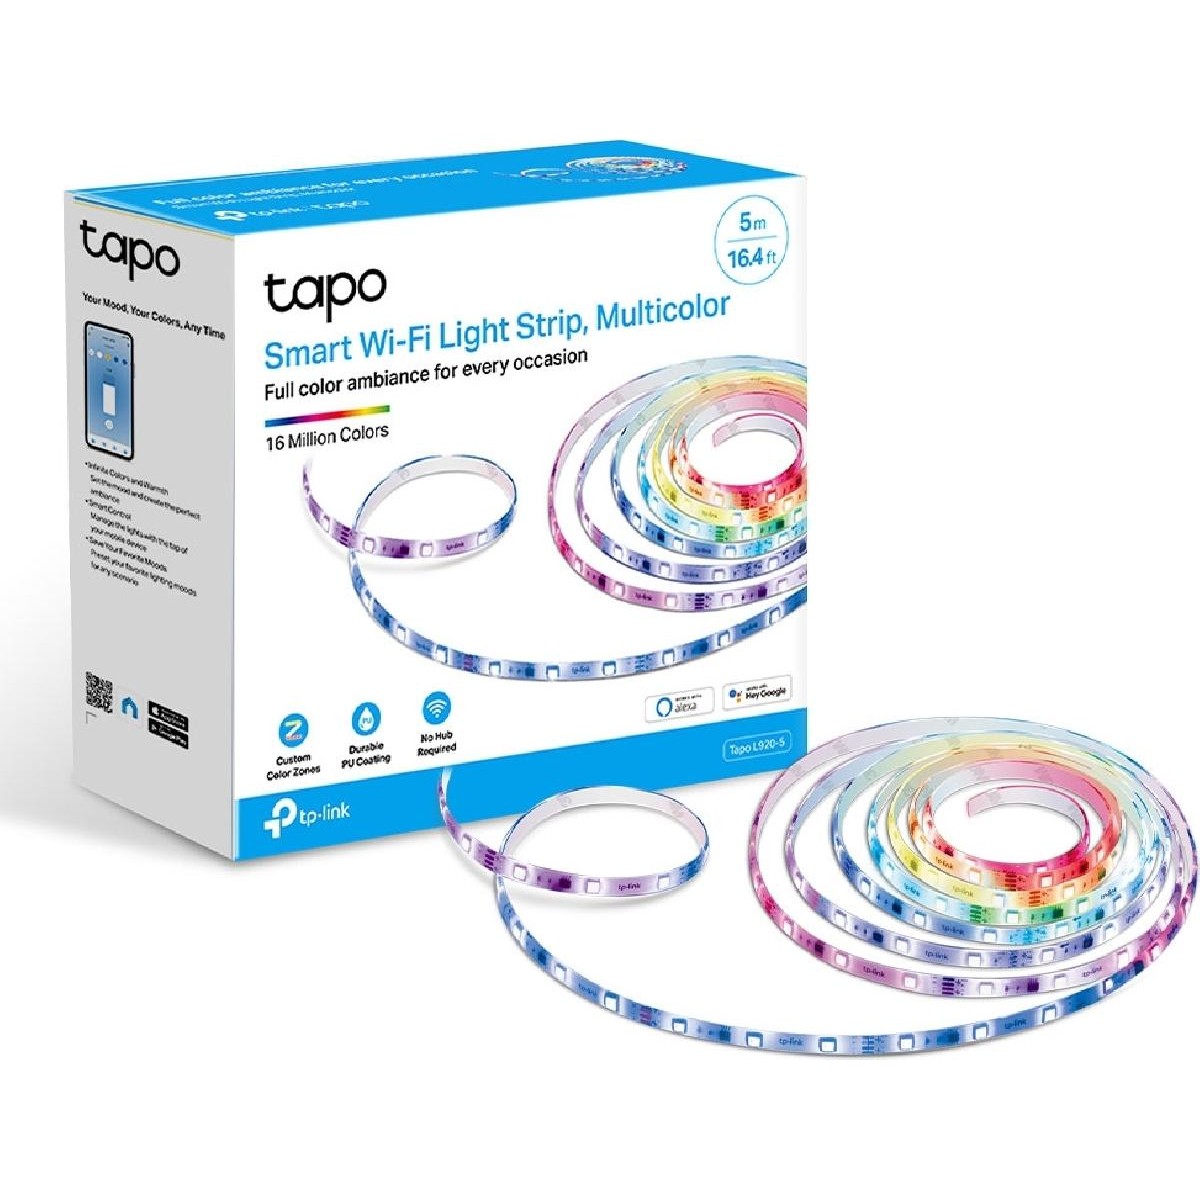 Tp-Link Tapo L920-5 ver1.20 Smart Wi-Fi light strip multicolor 5m